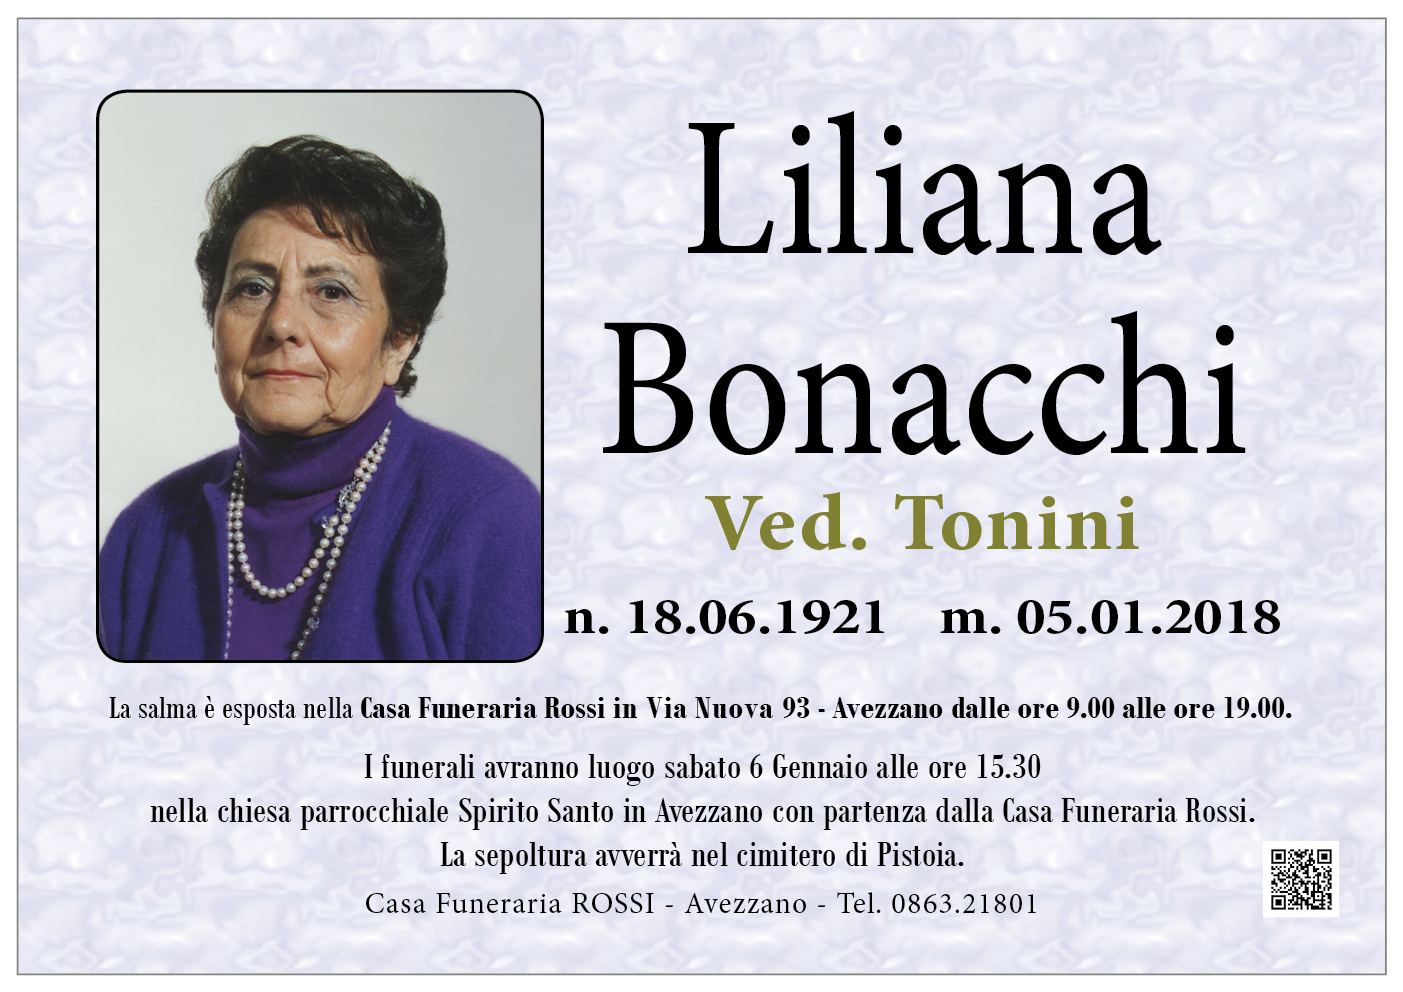 Liliana Bonacchi